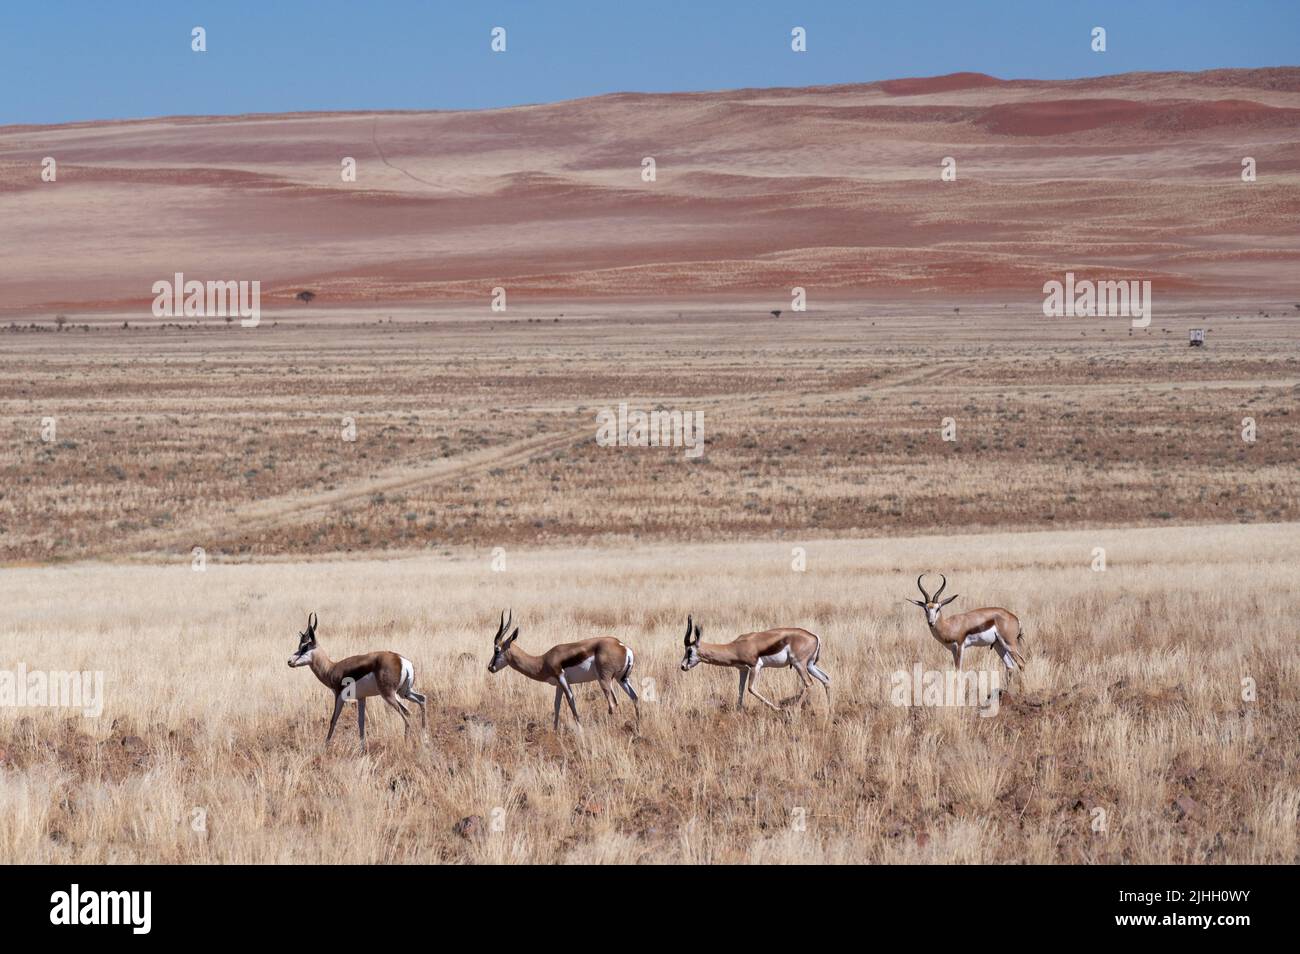 Springbok antelope (Antidorcas marsupialis) in natural habitat, Namibia Stock Photo